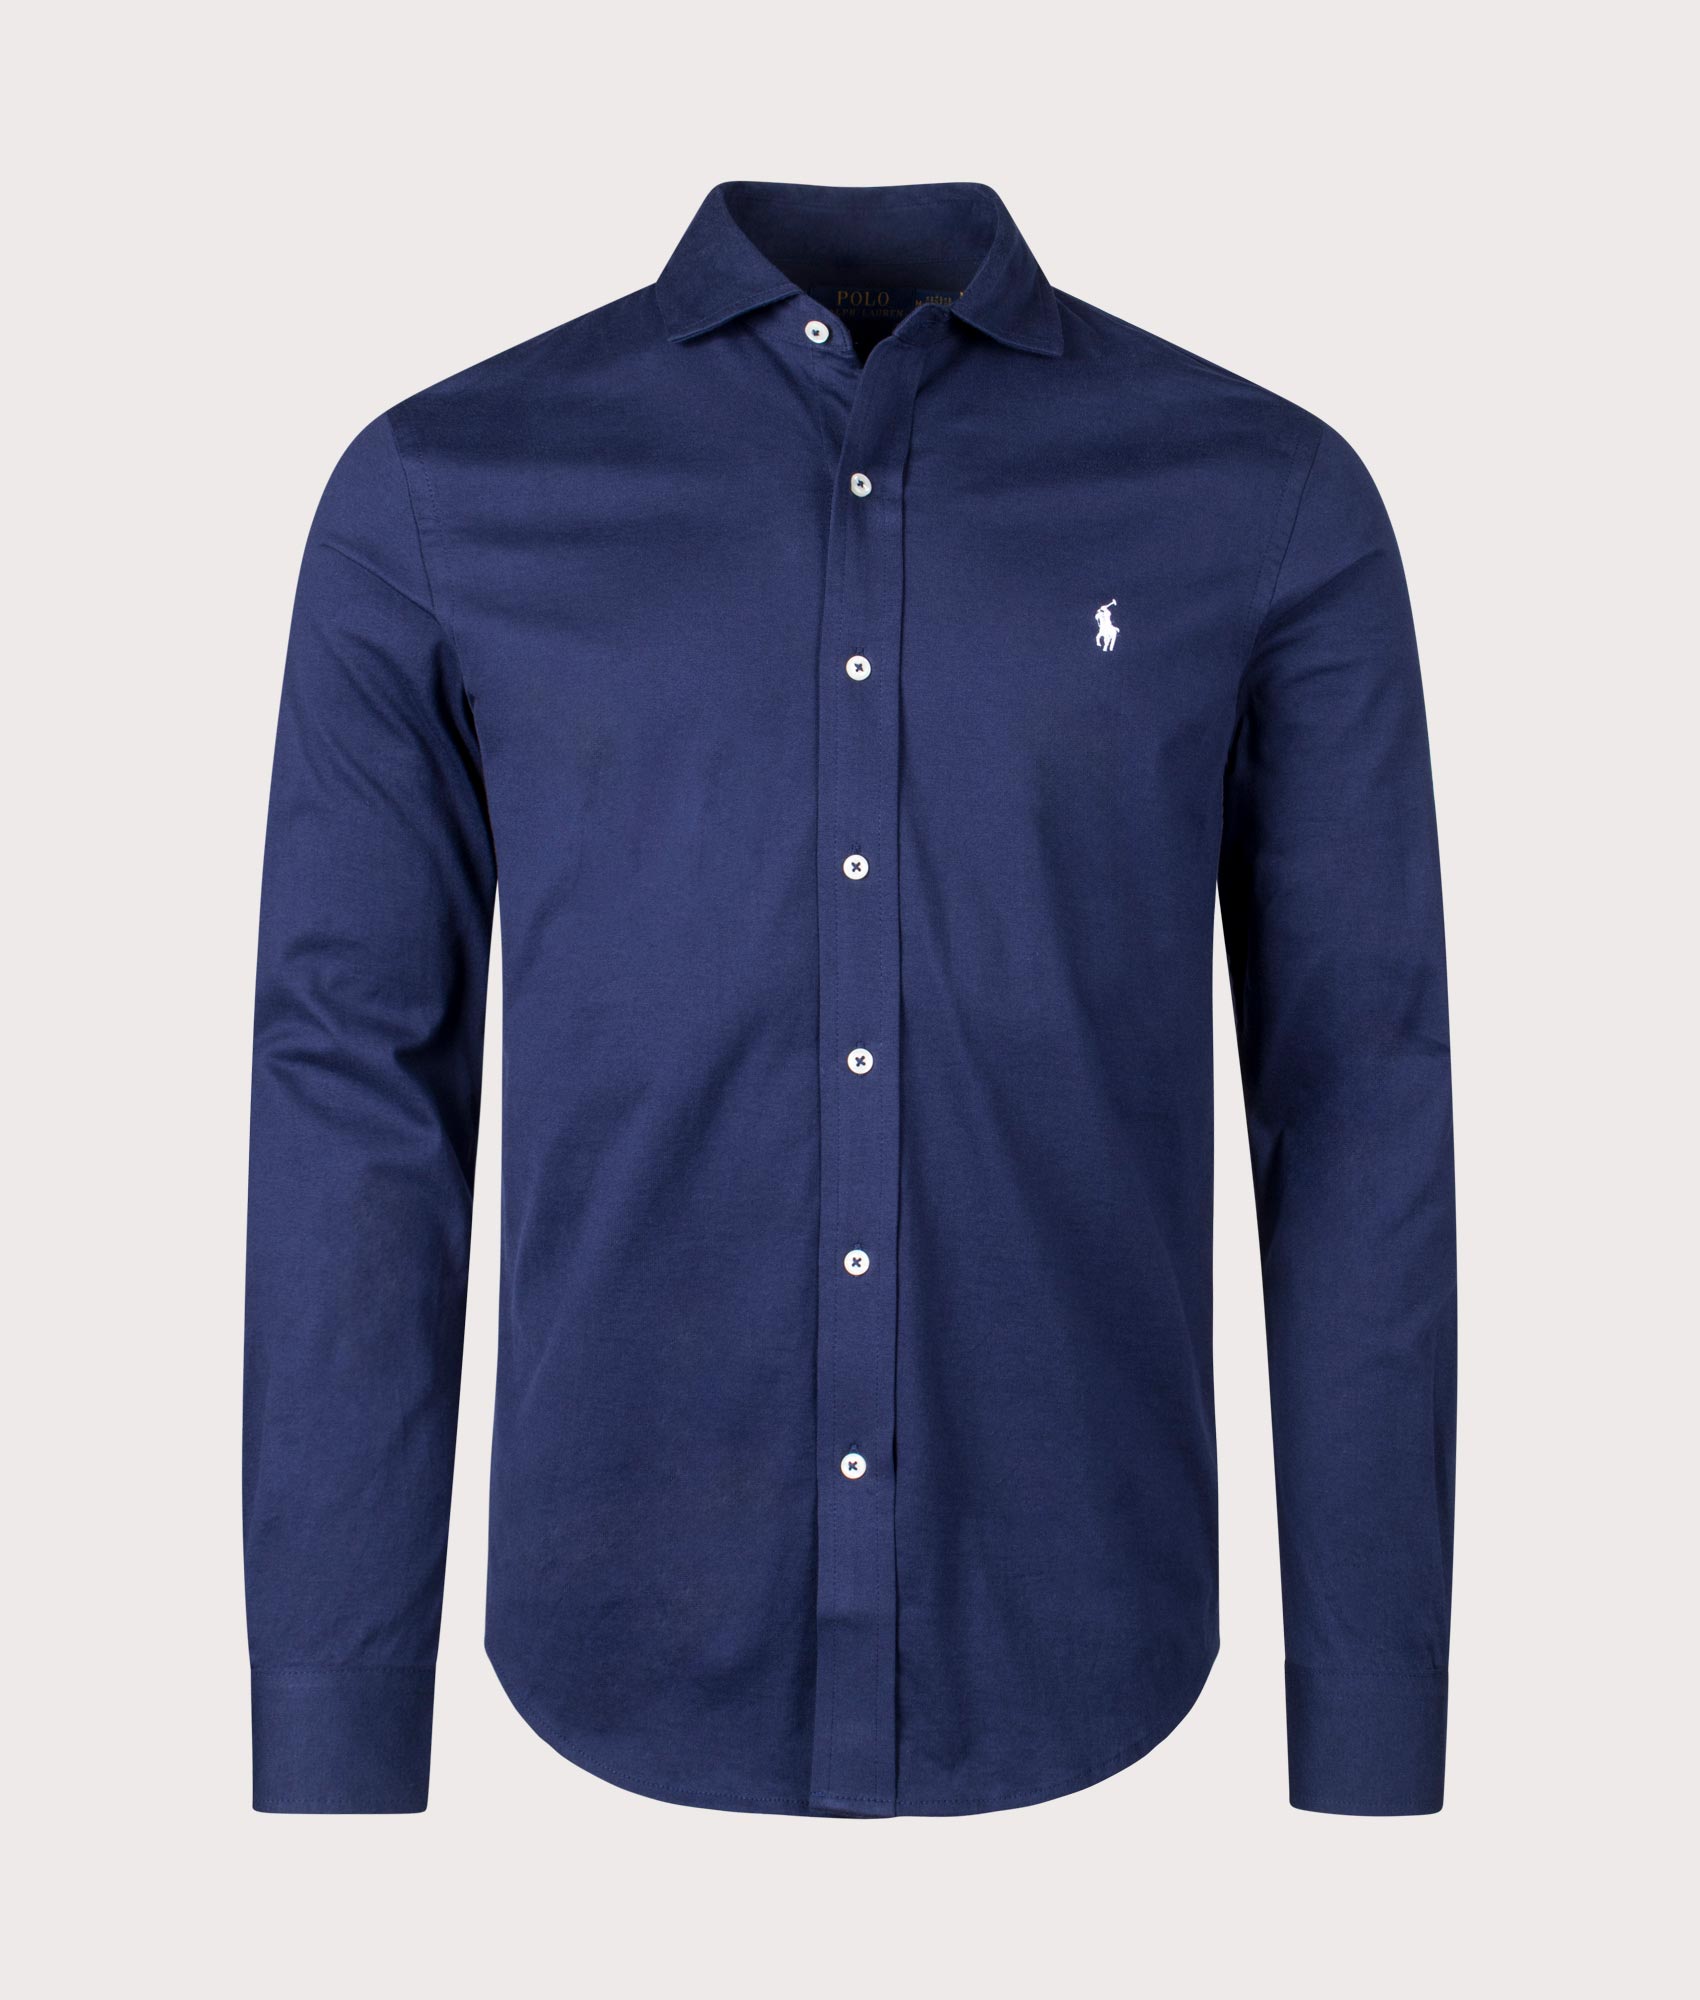 Polo Ralph Lauren Mens Jersey Shirt - Colour: 003 Cruise Navy - Size: Large